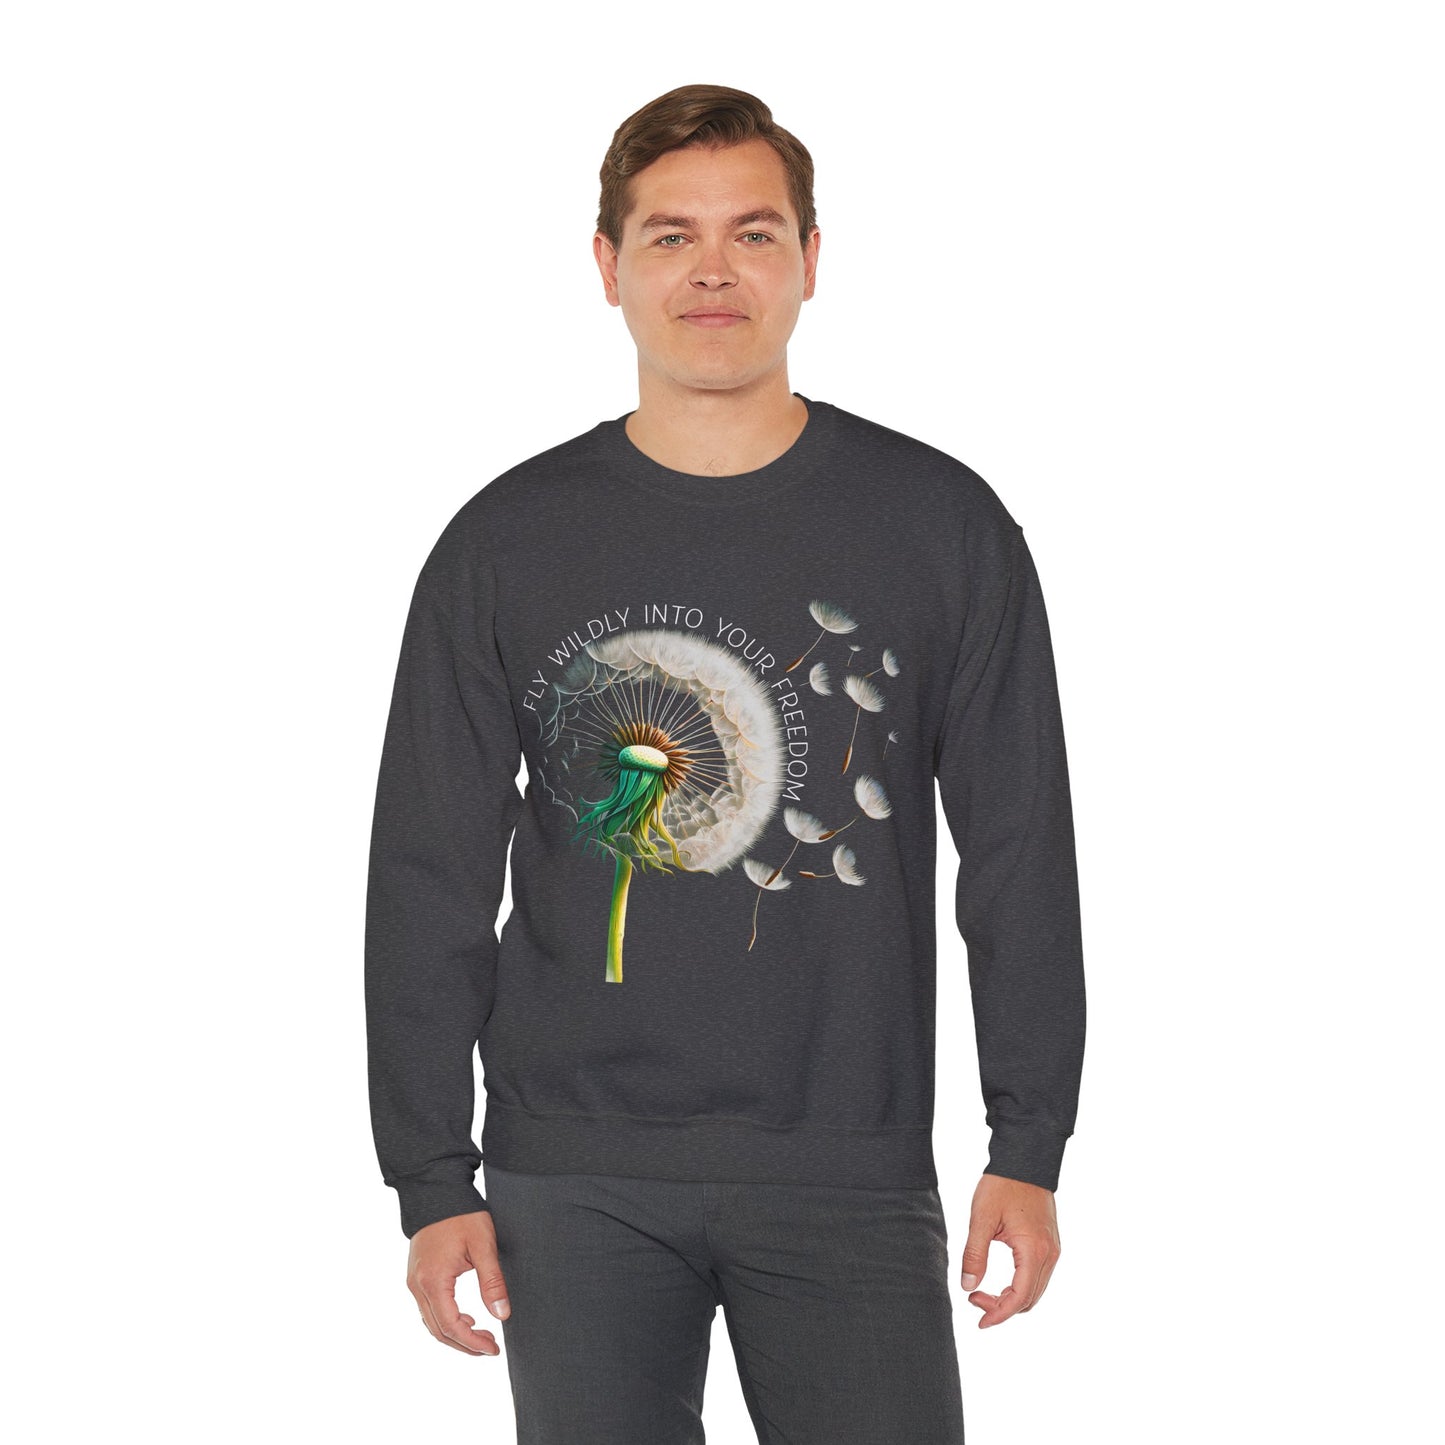 Dandelions Blowing Fly Wildly Into Your Freedom Inspirational Crewneck Sweatshirt